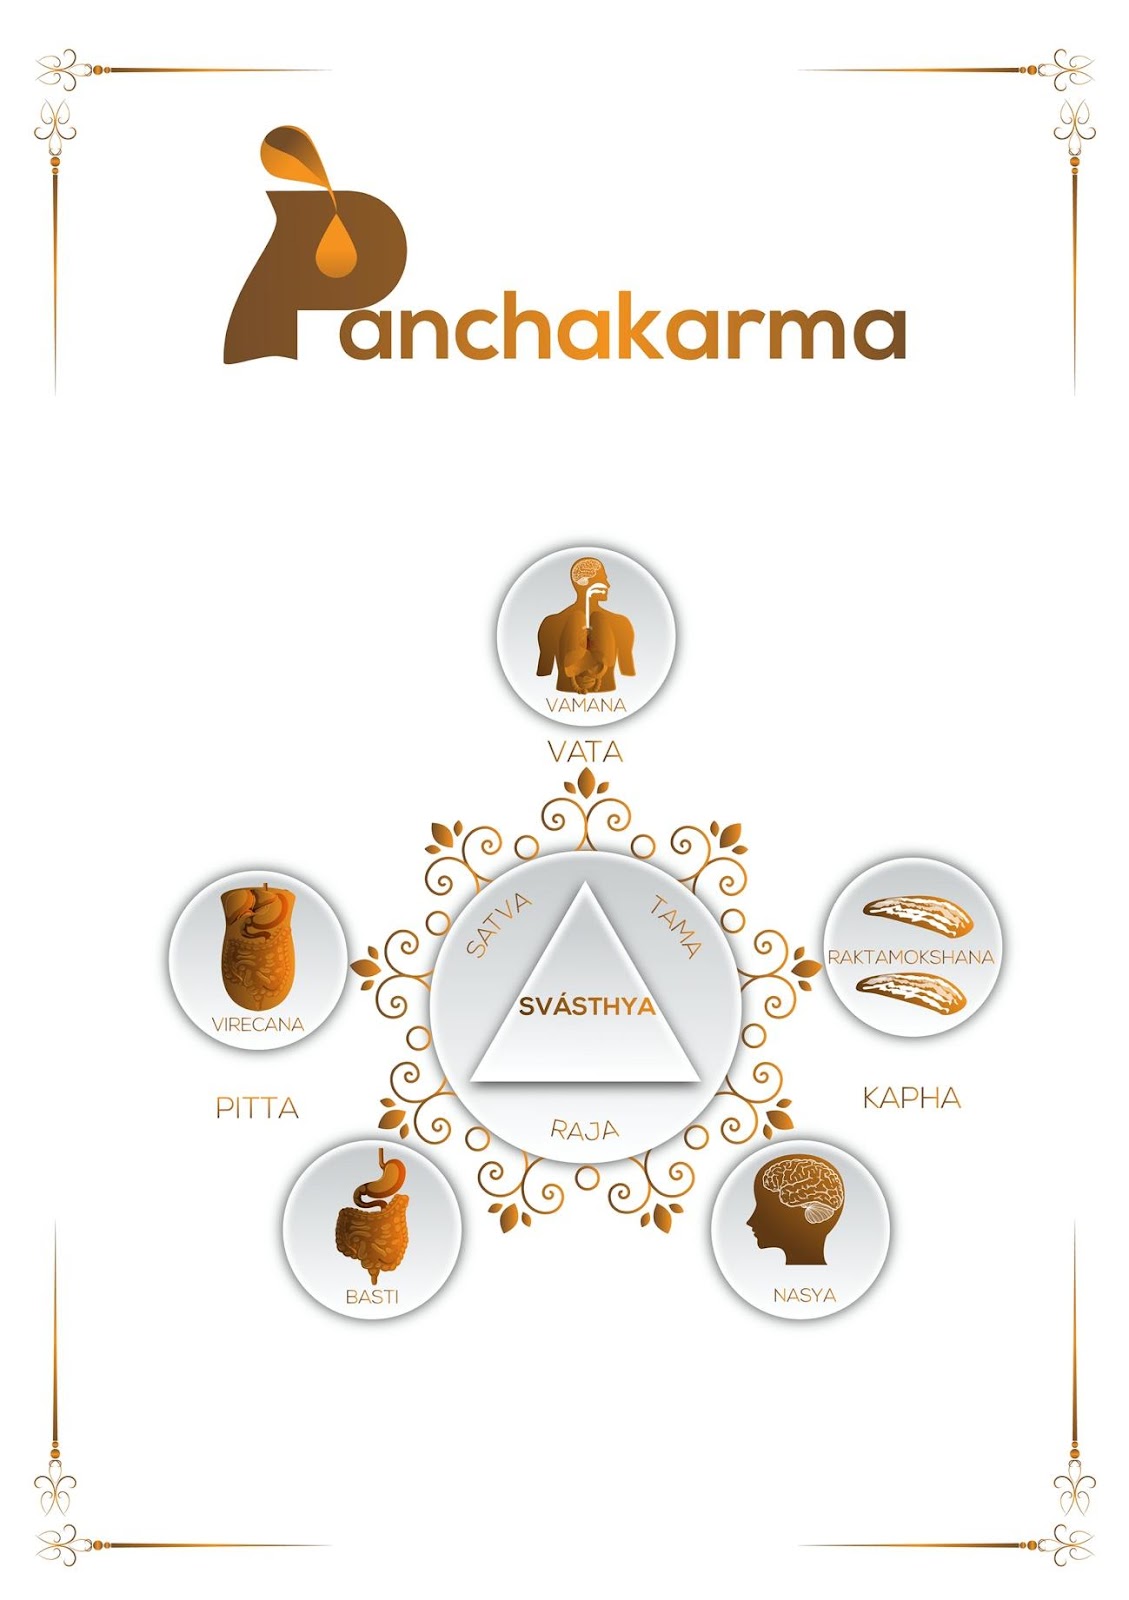 Panchakarma treatment